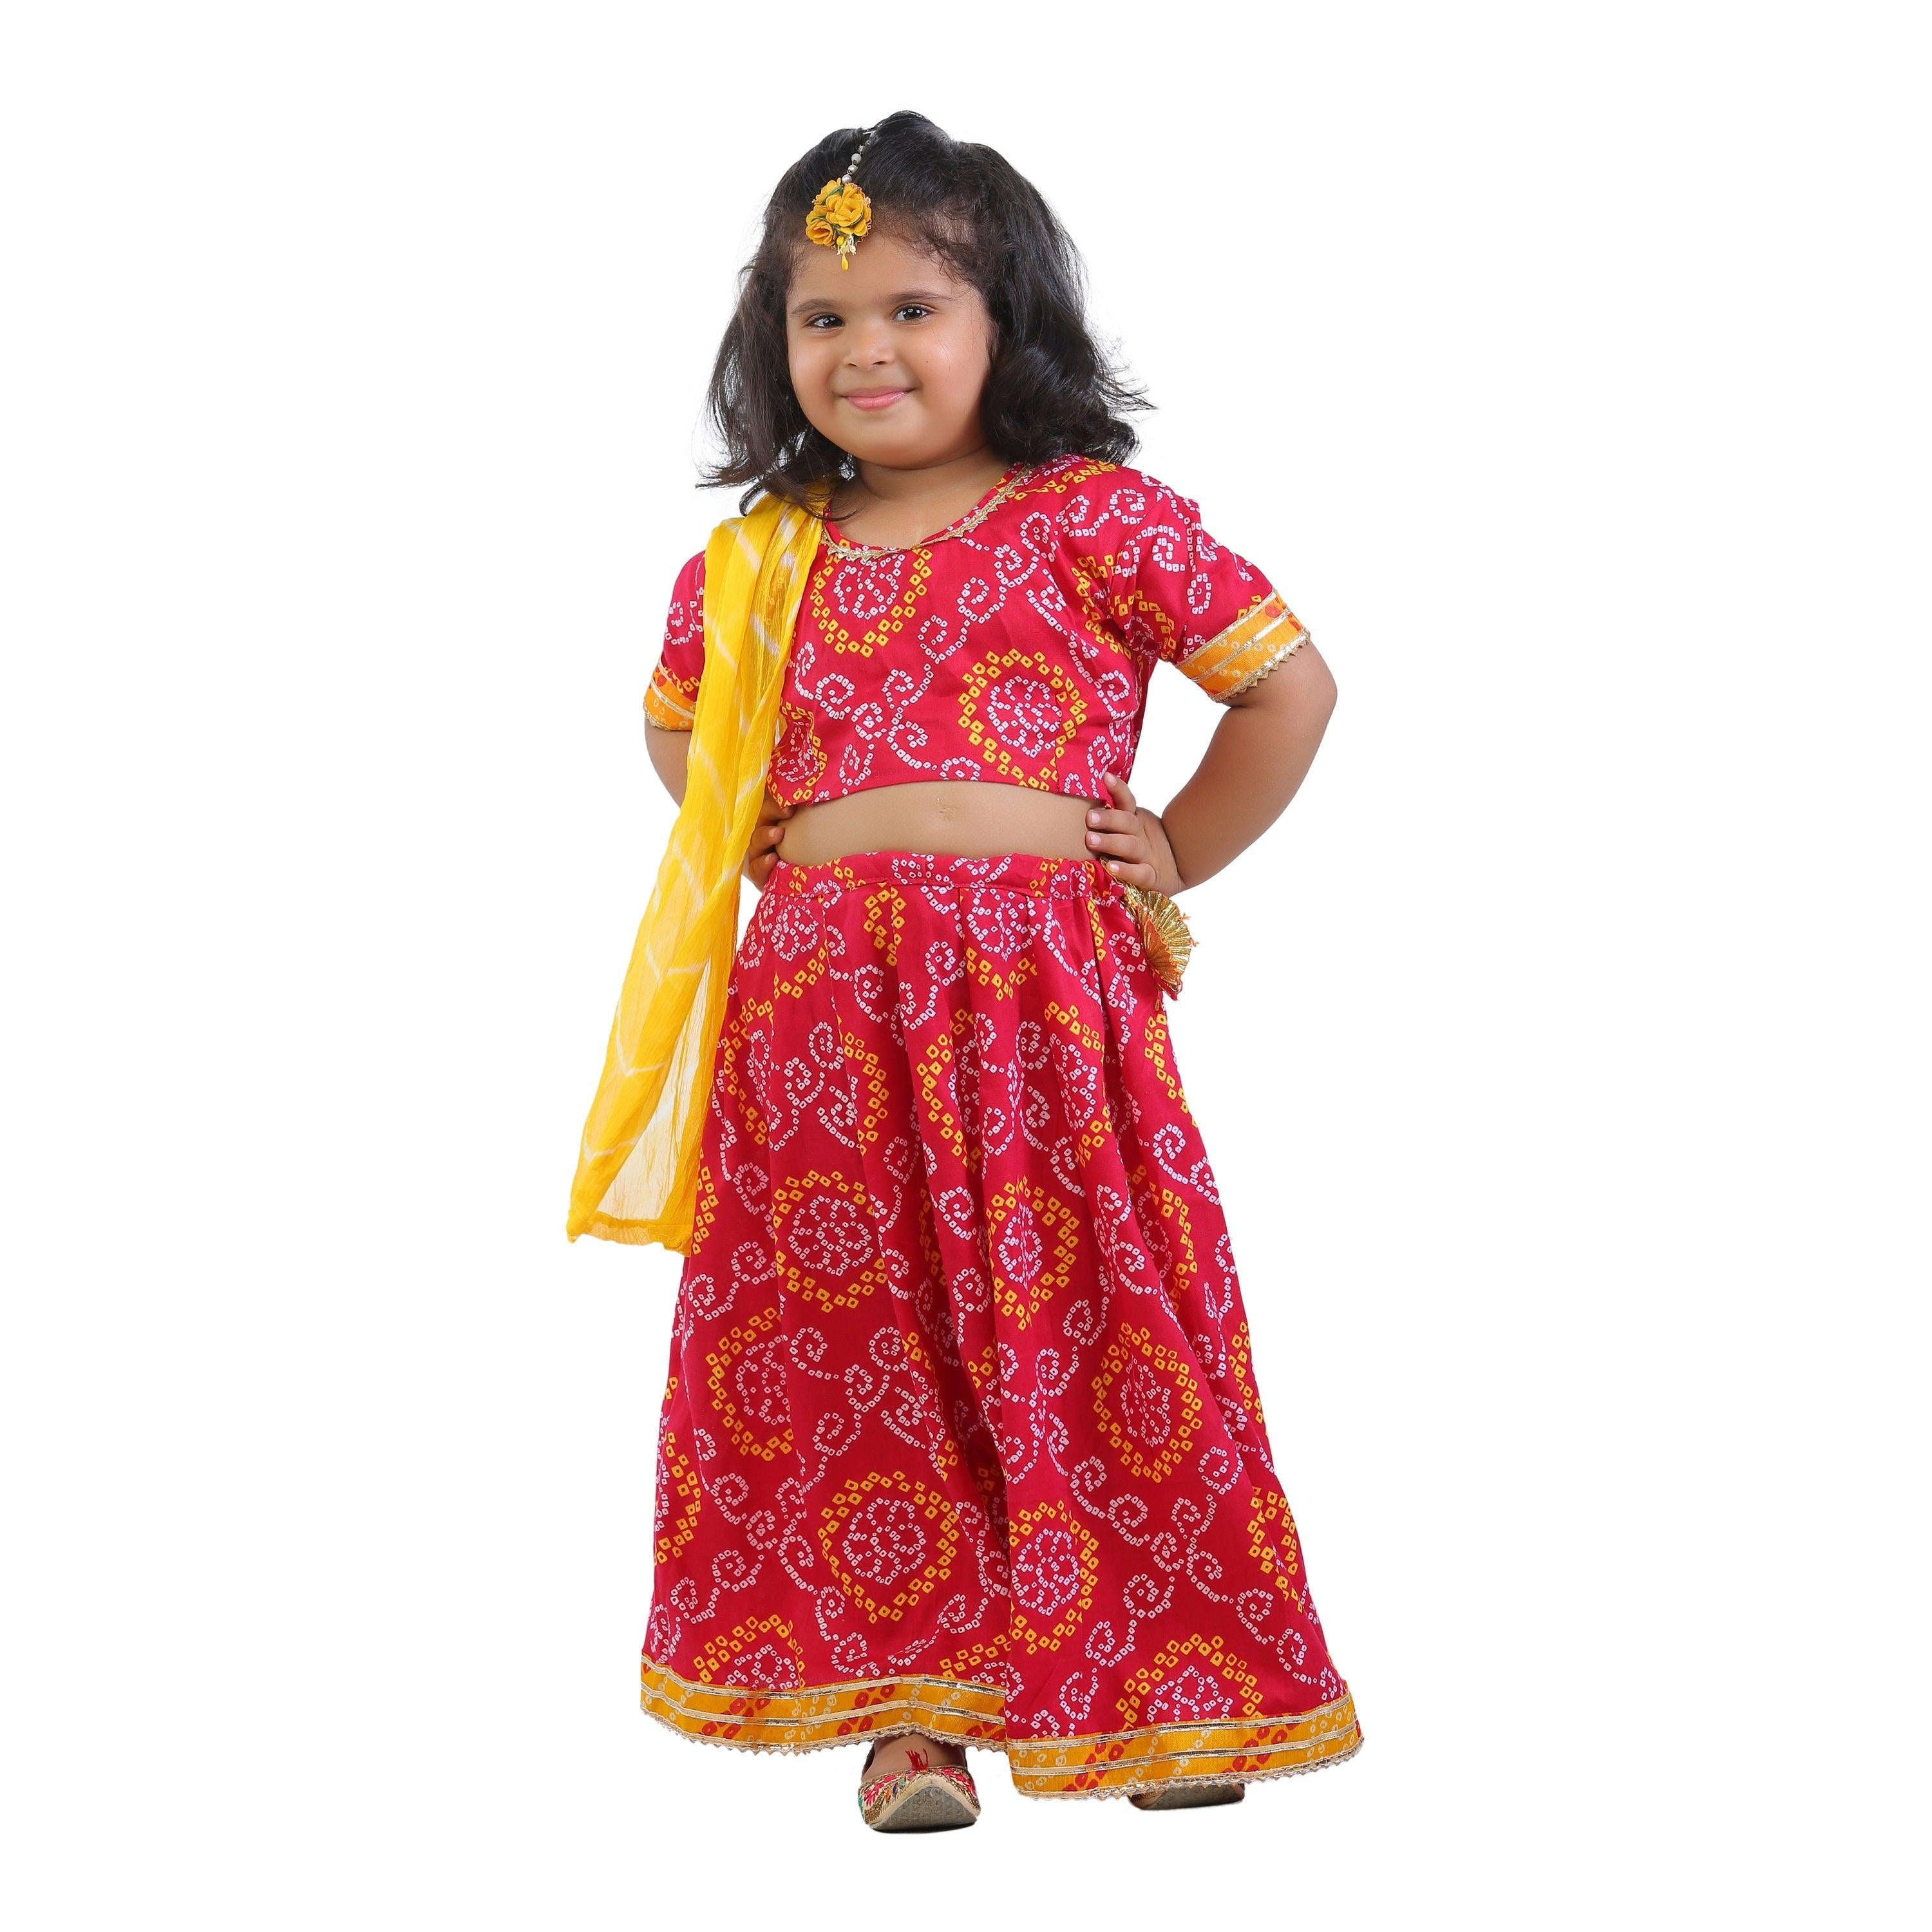 Radha Dress for Girls Kids by itsmycostume on DeviantArt